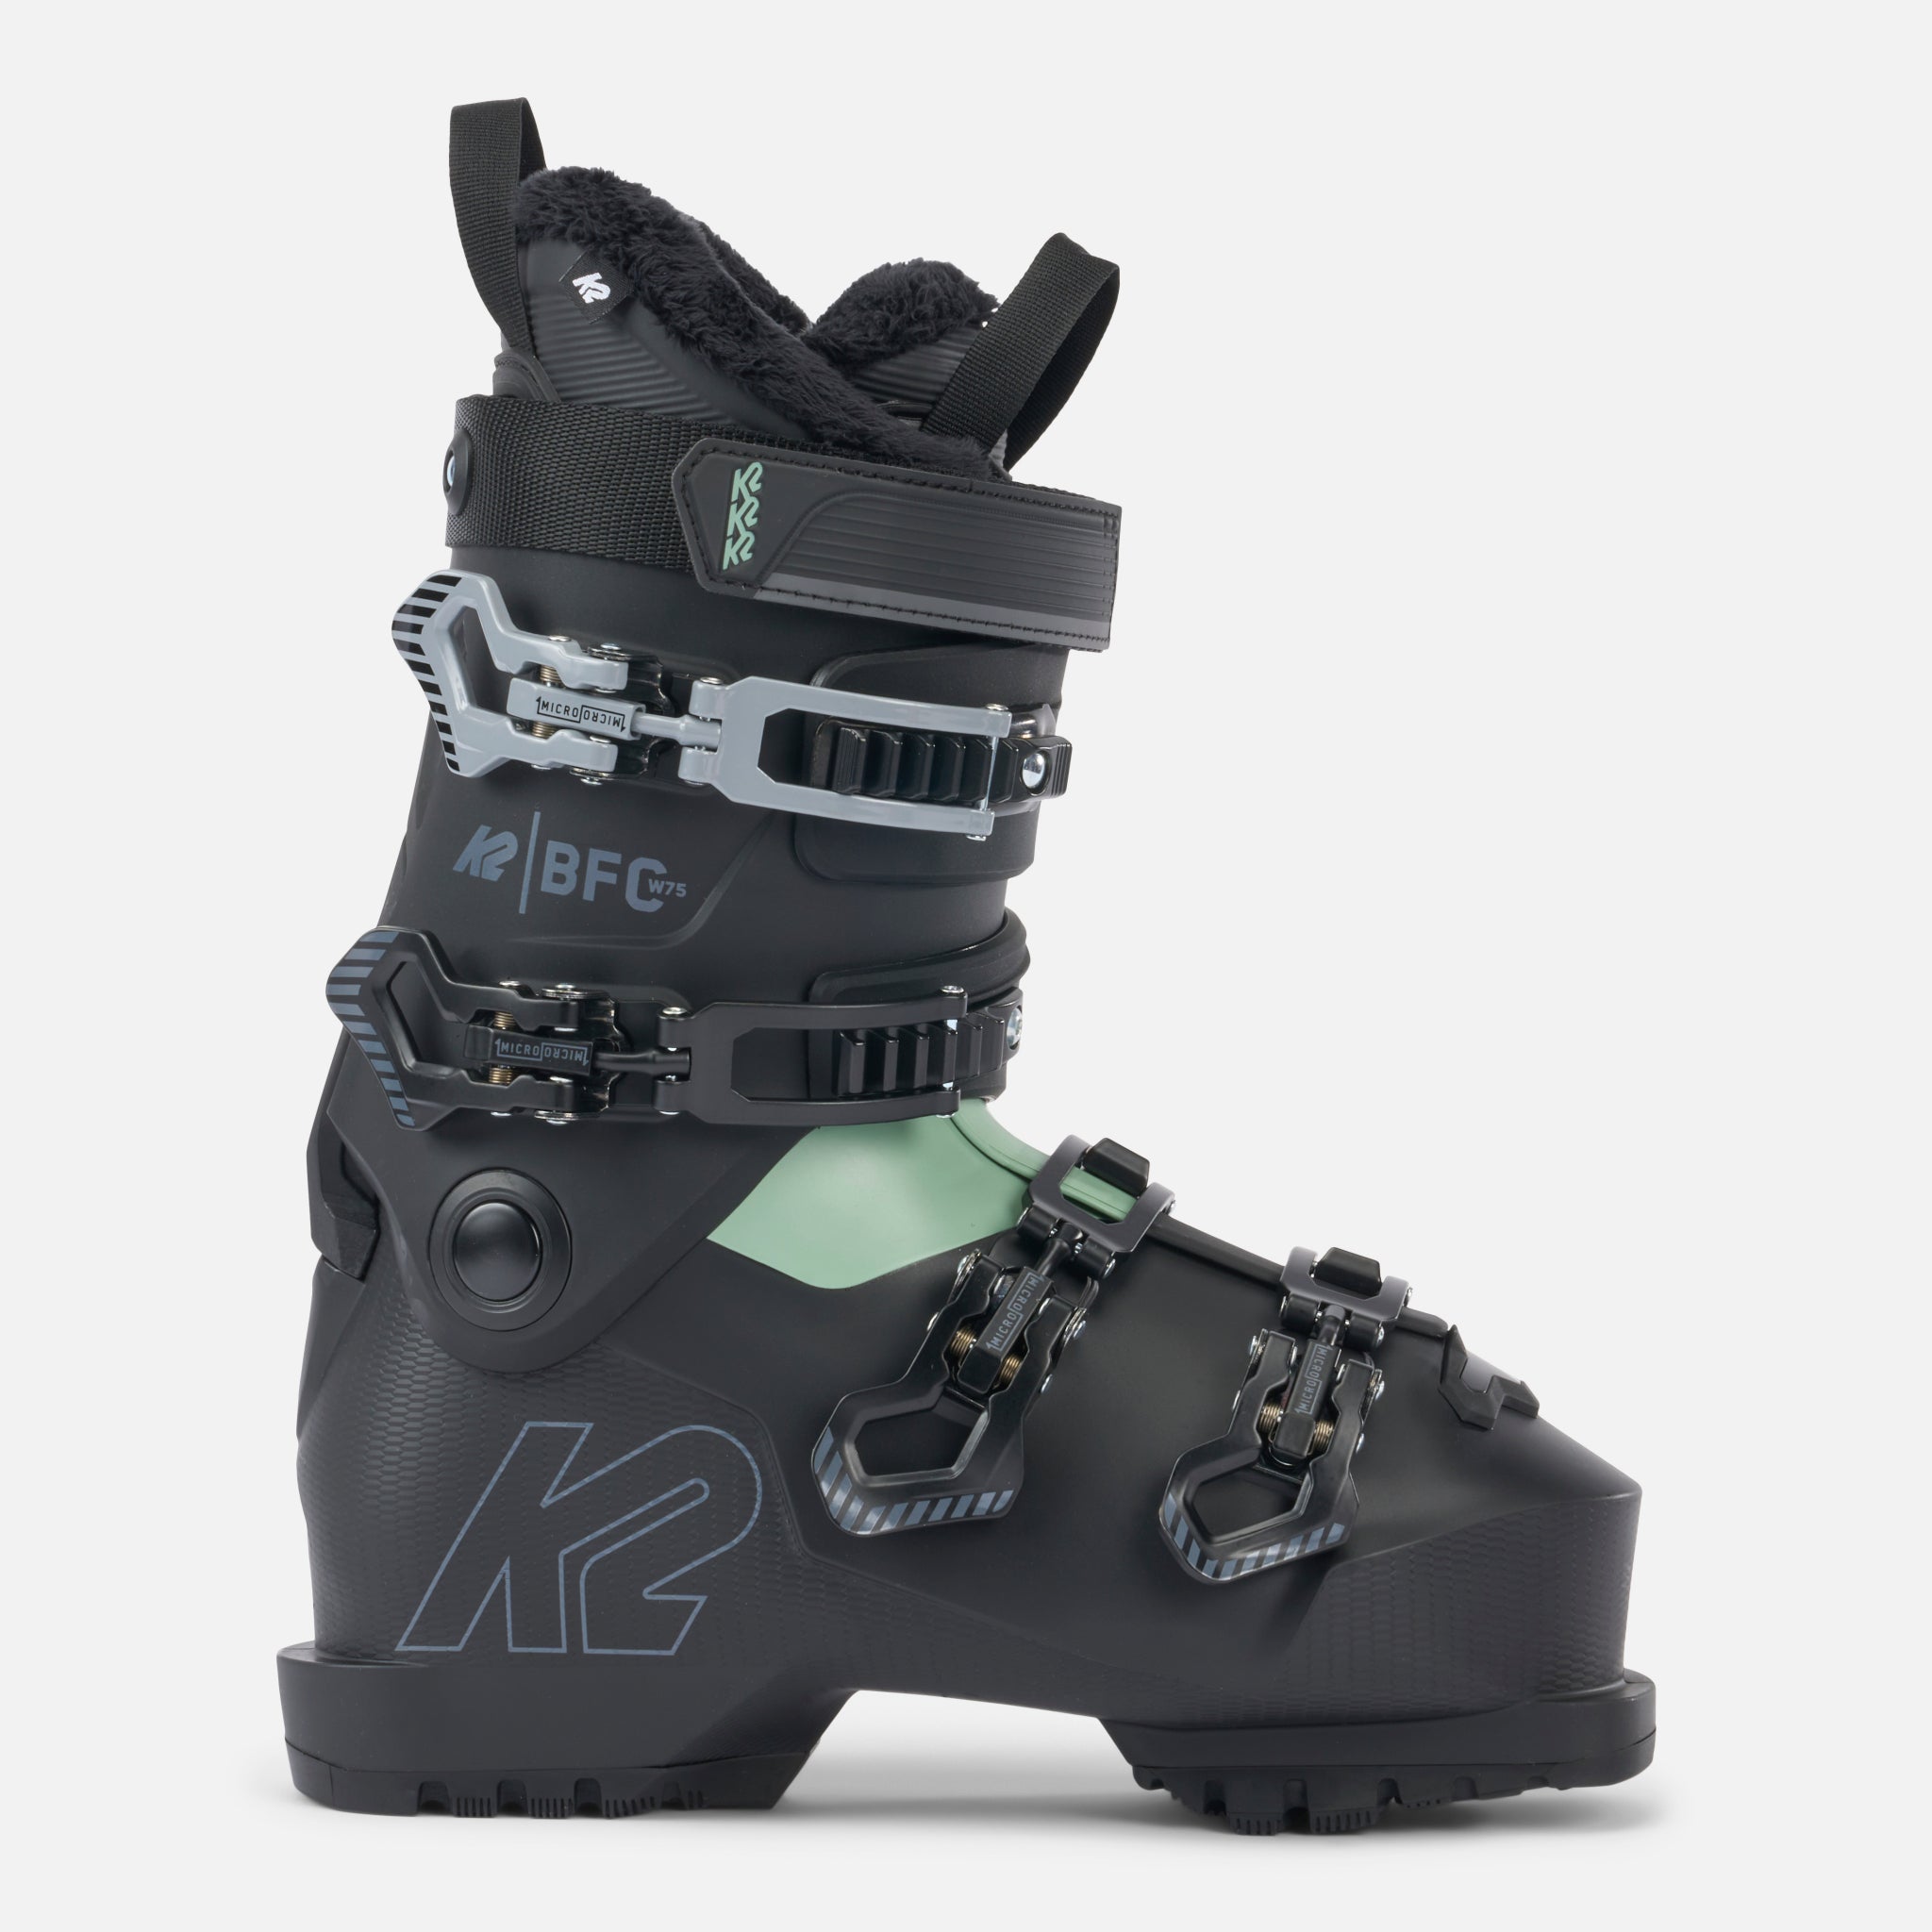 K2 – The Ski Chalet